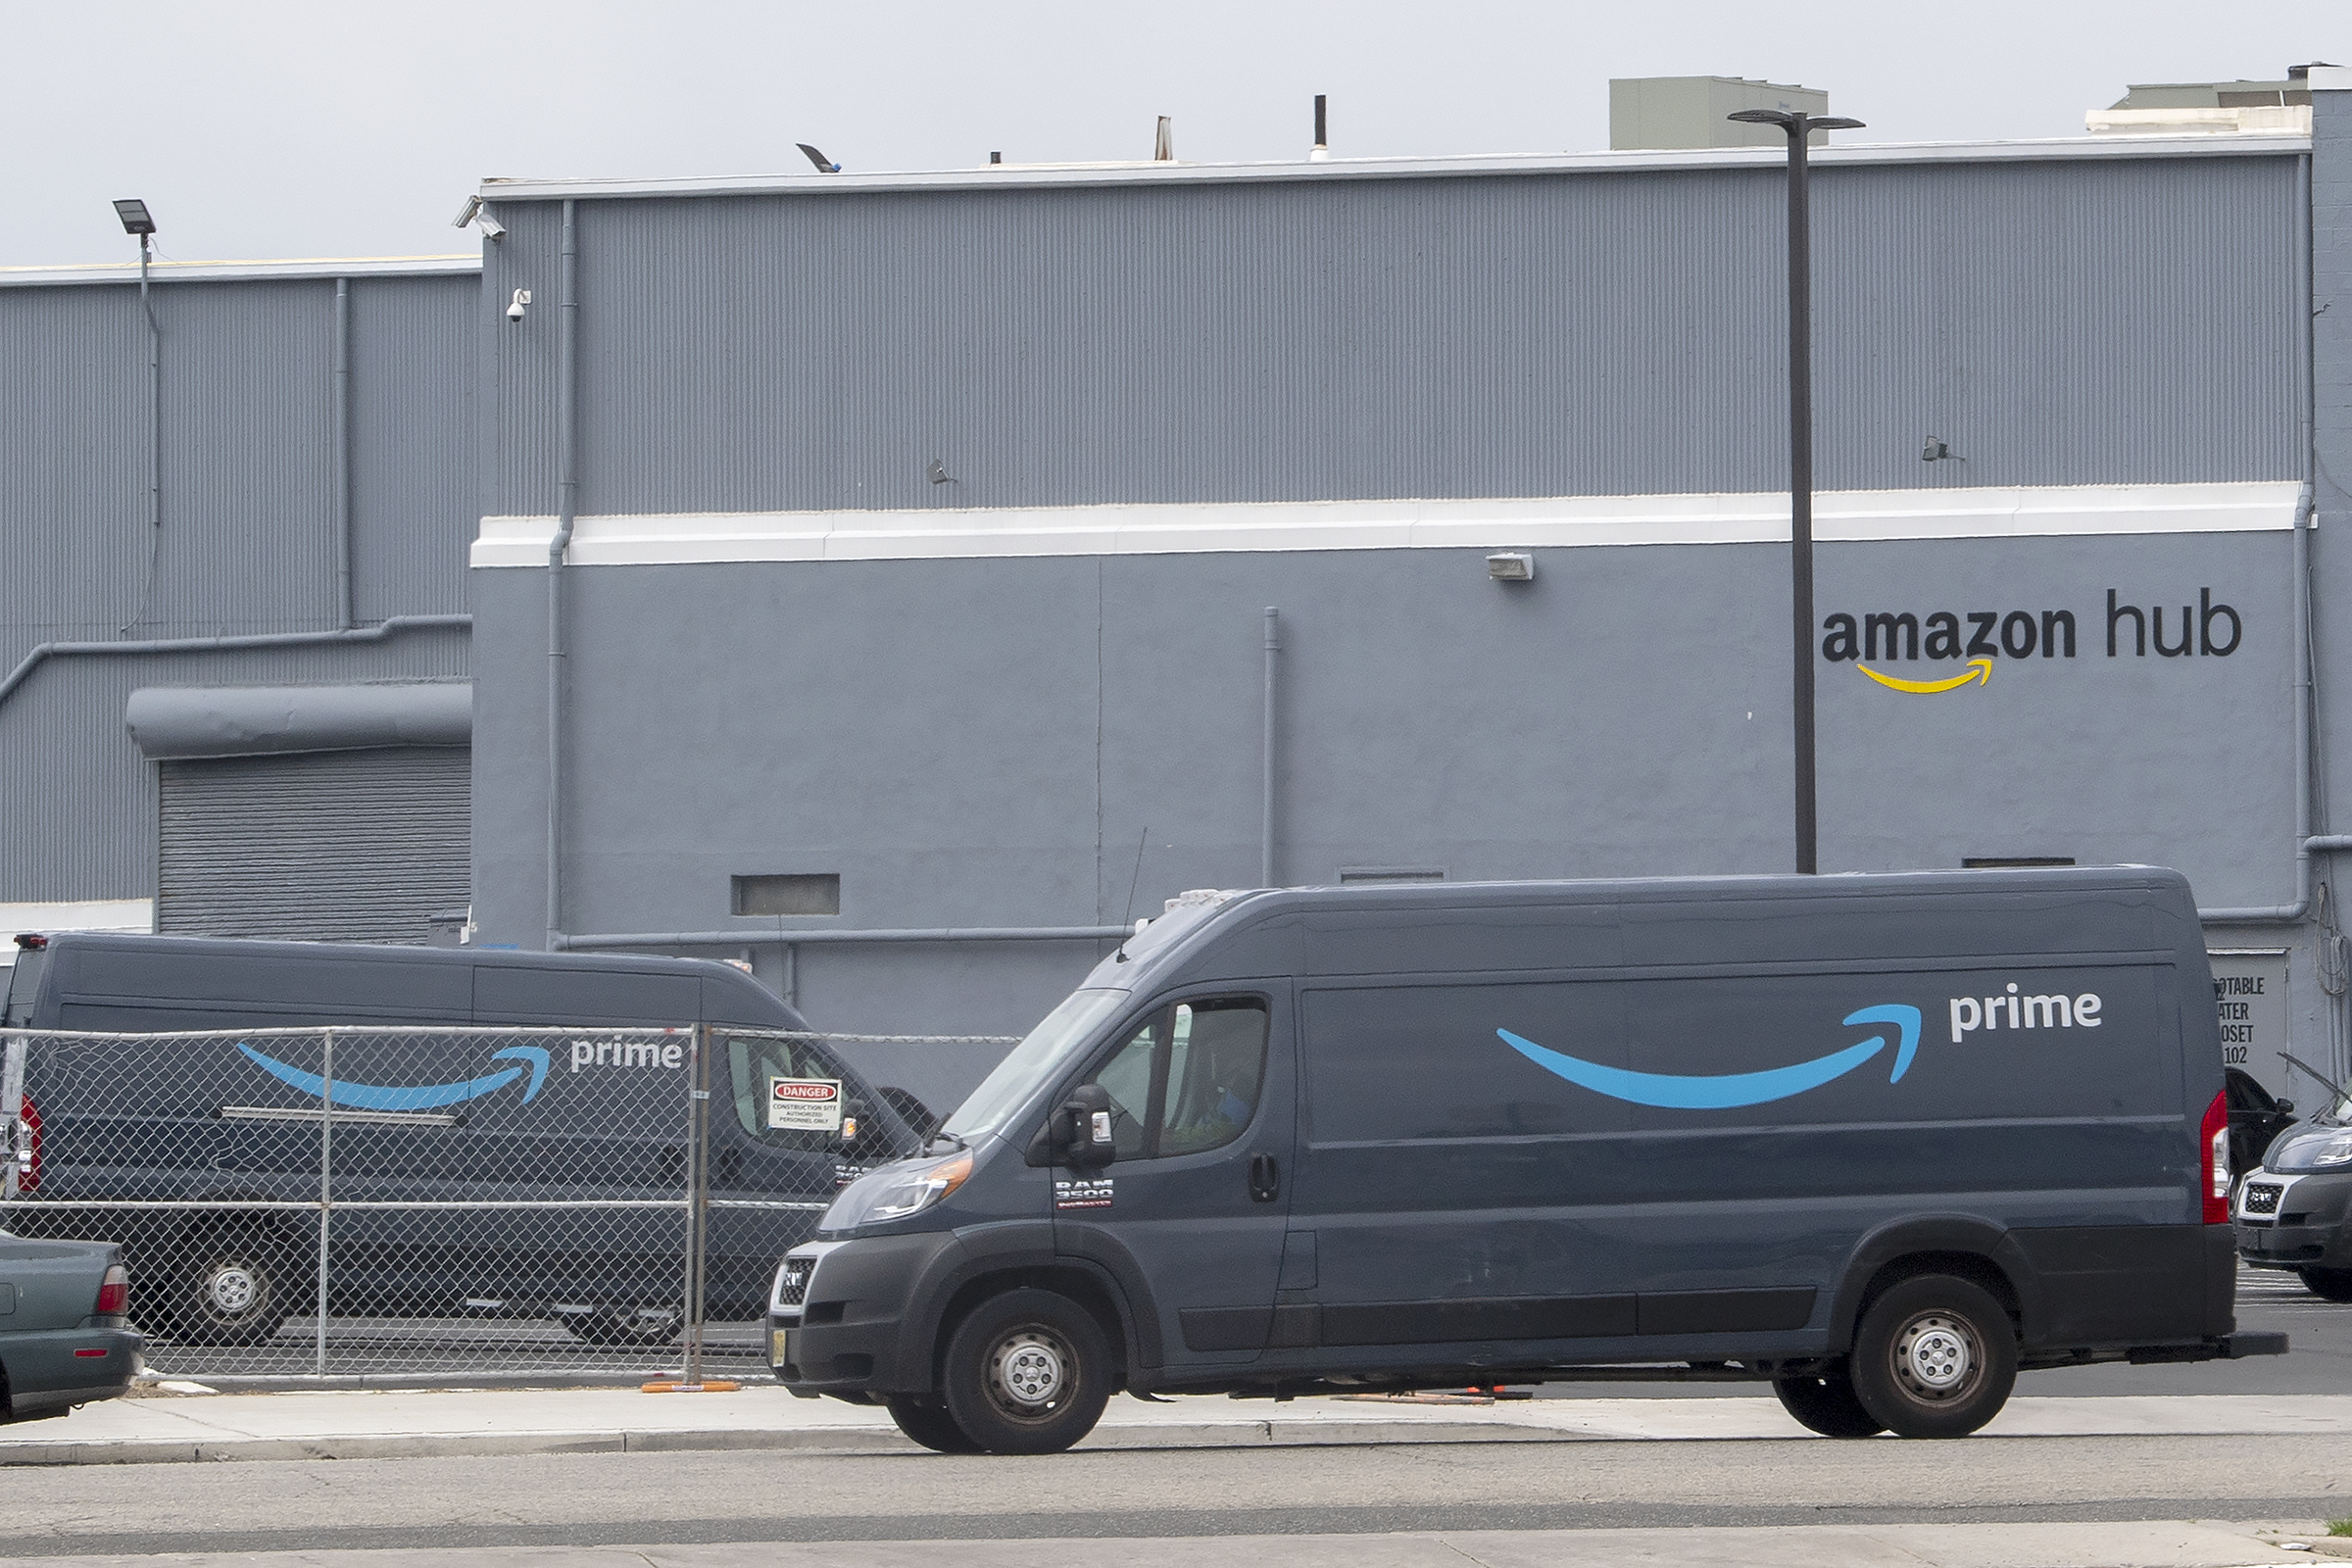 Amazon Jobs In Philadelphia What You Need To Know